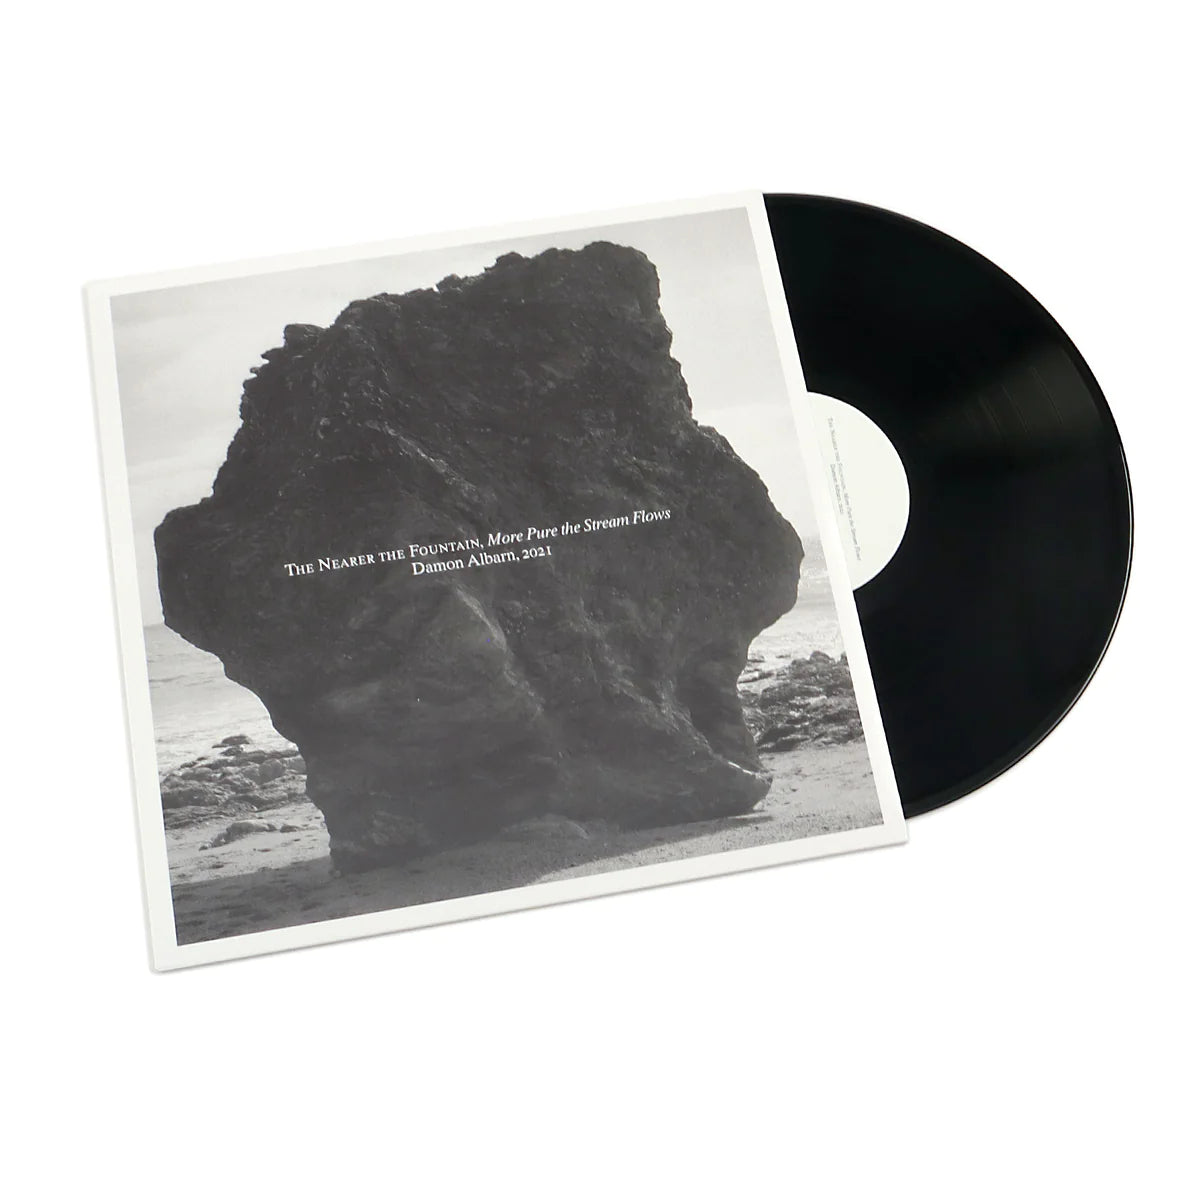 Damon Albarn - The Nearer the Fountain, More Pure the Streams Flows (Black Vinyl)